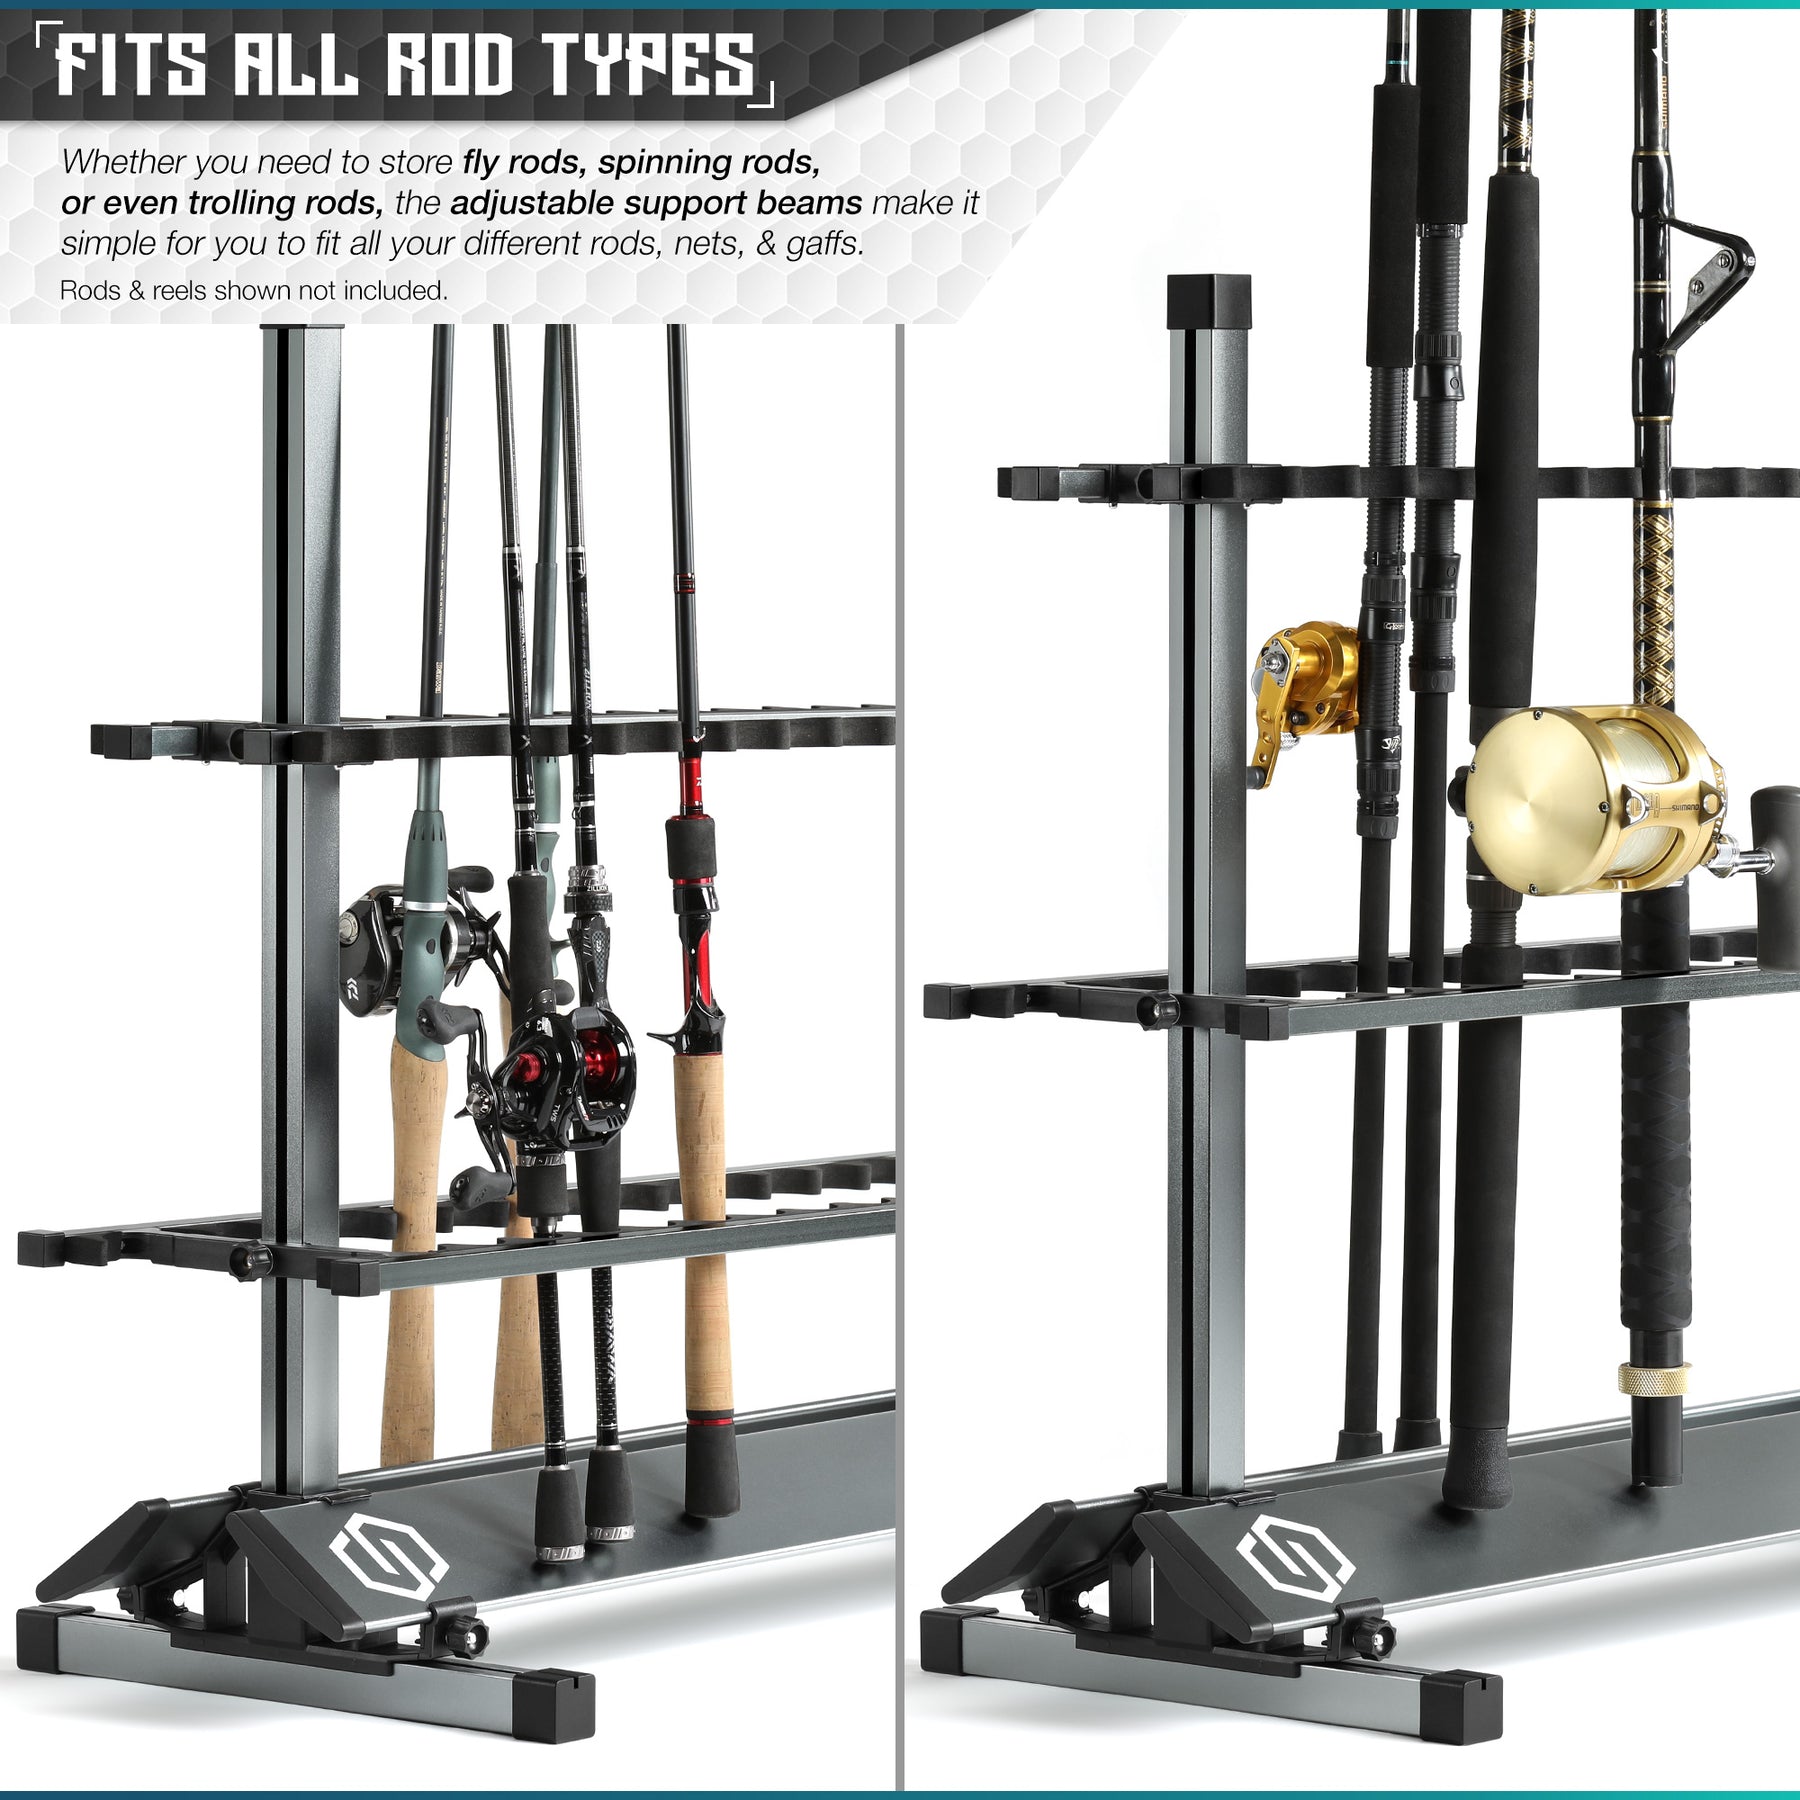 Aluminum Fishing Rod Rack - 24/36/48 Slots – Savior Equipment